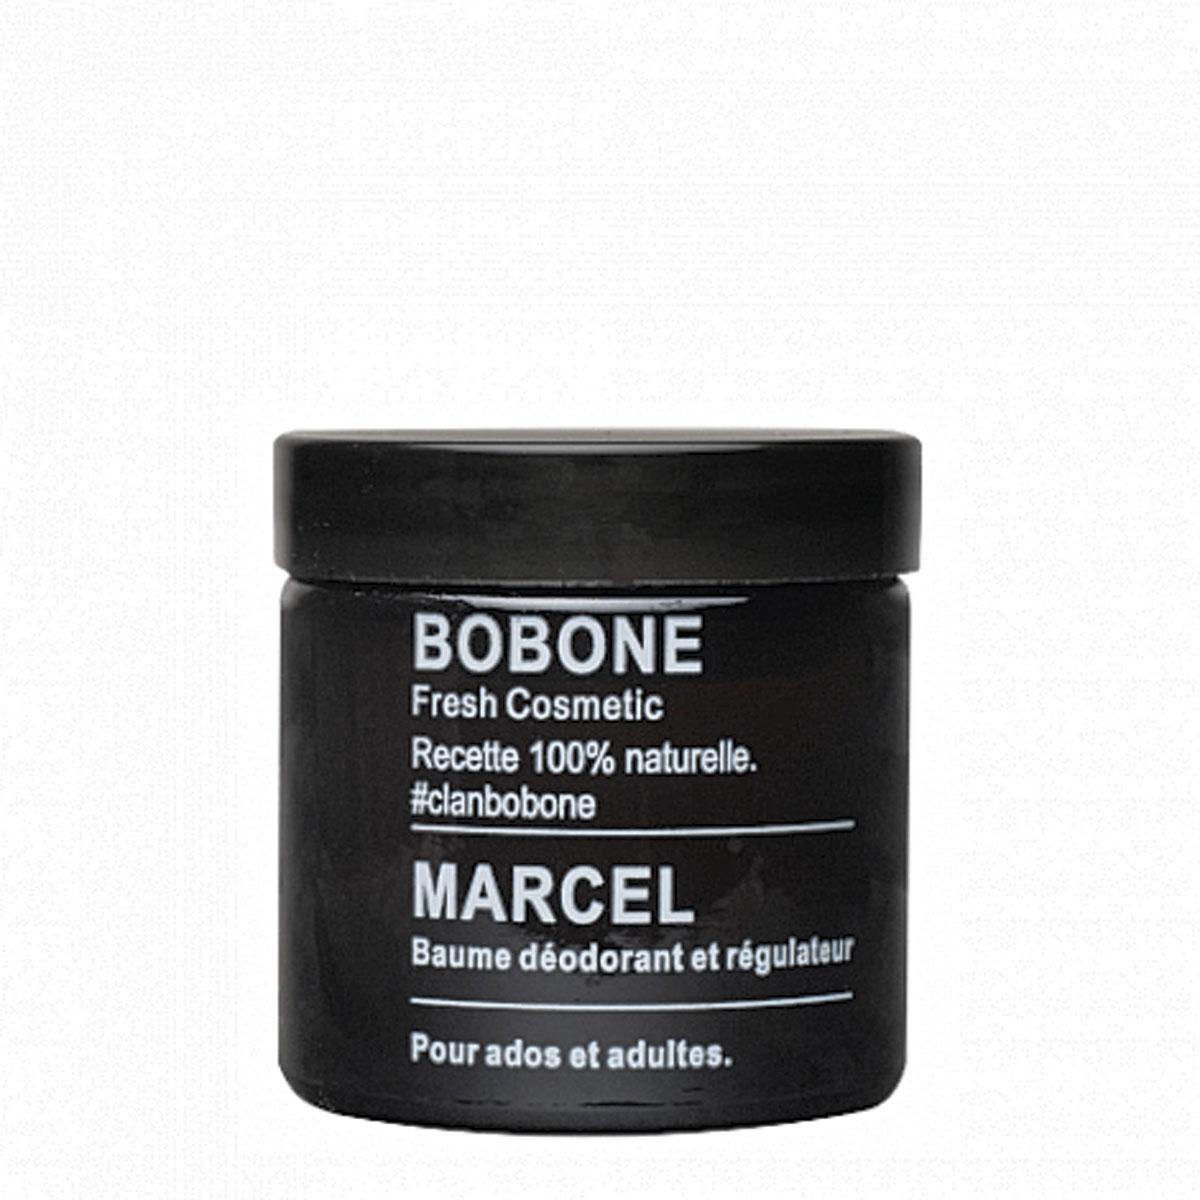 Balsem Marcel, (22,50 euro voor 60 ml), Bobone, bobone.be.